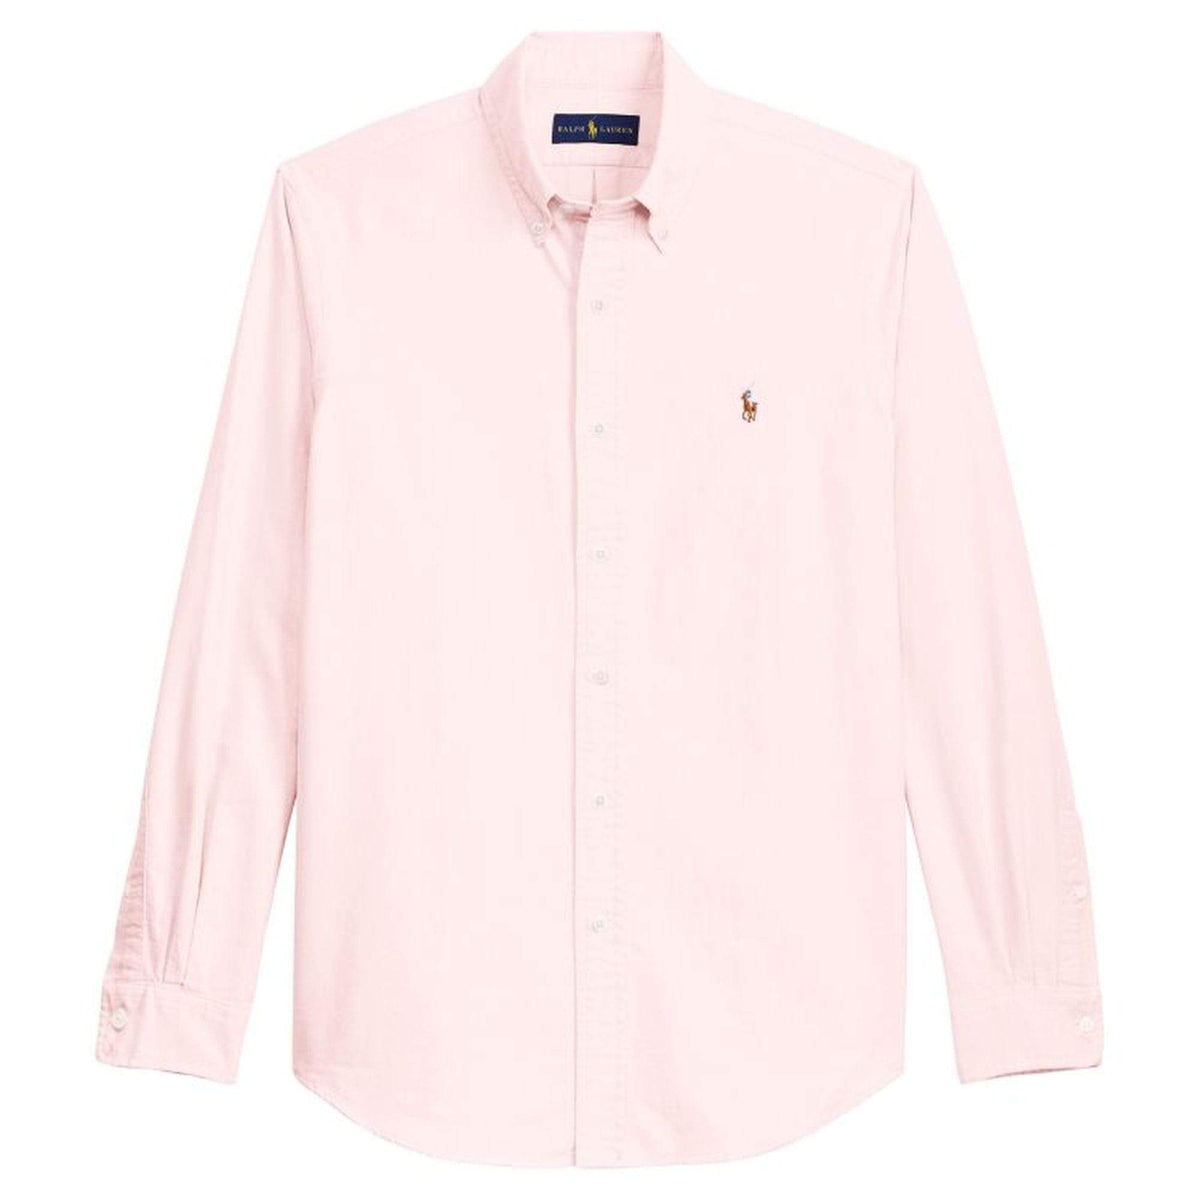 Polo Ralph Lauren - Shirts - Polo Ralph Lauren White Oxford Shirt